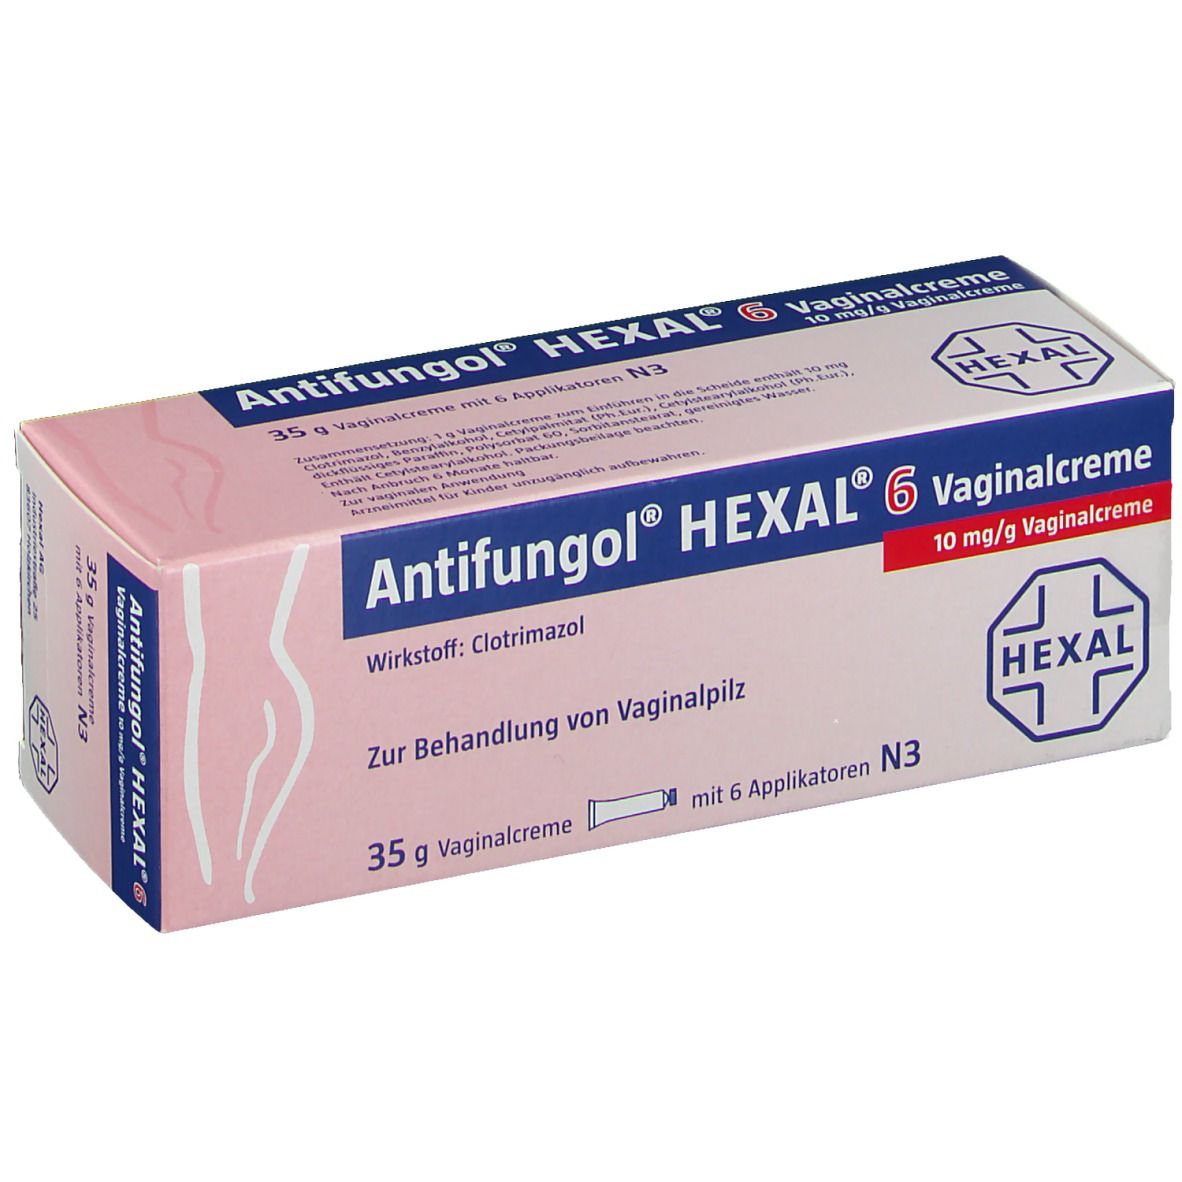 Antifungol 6 Vaginalcreme